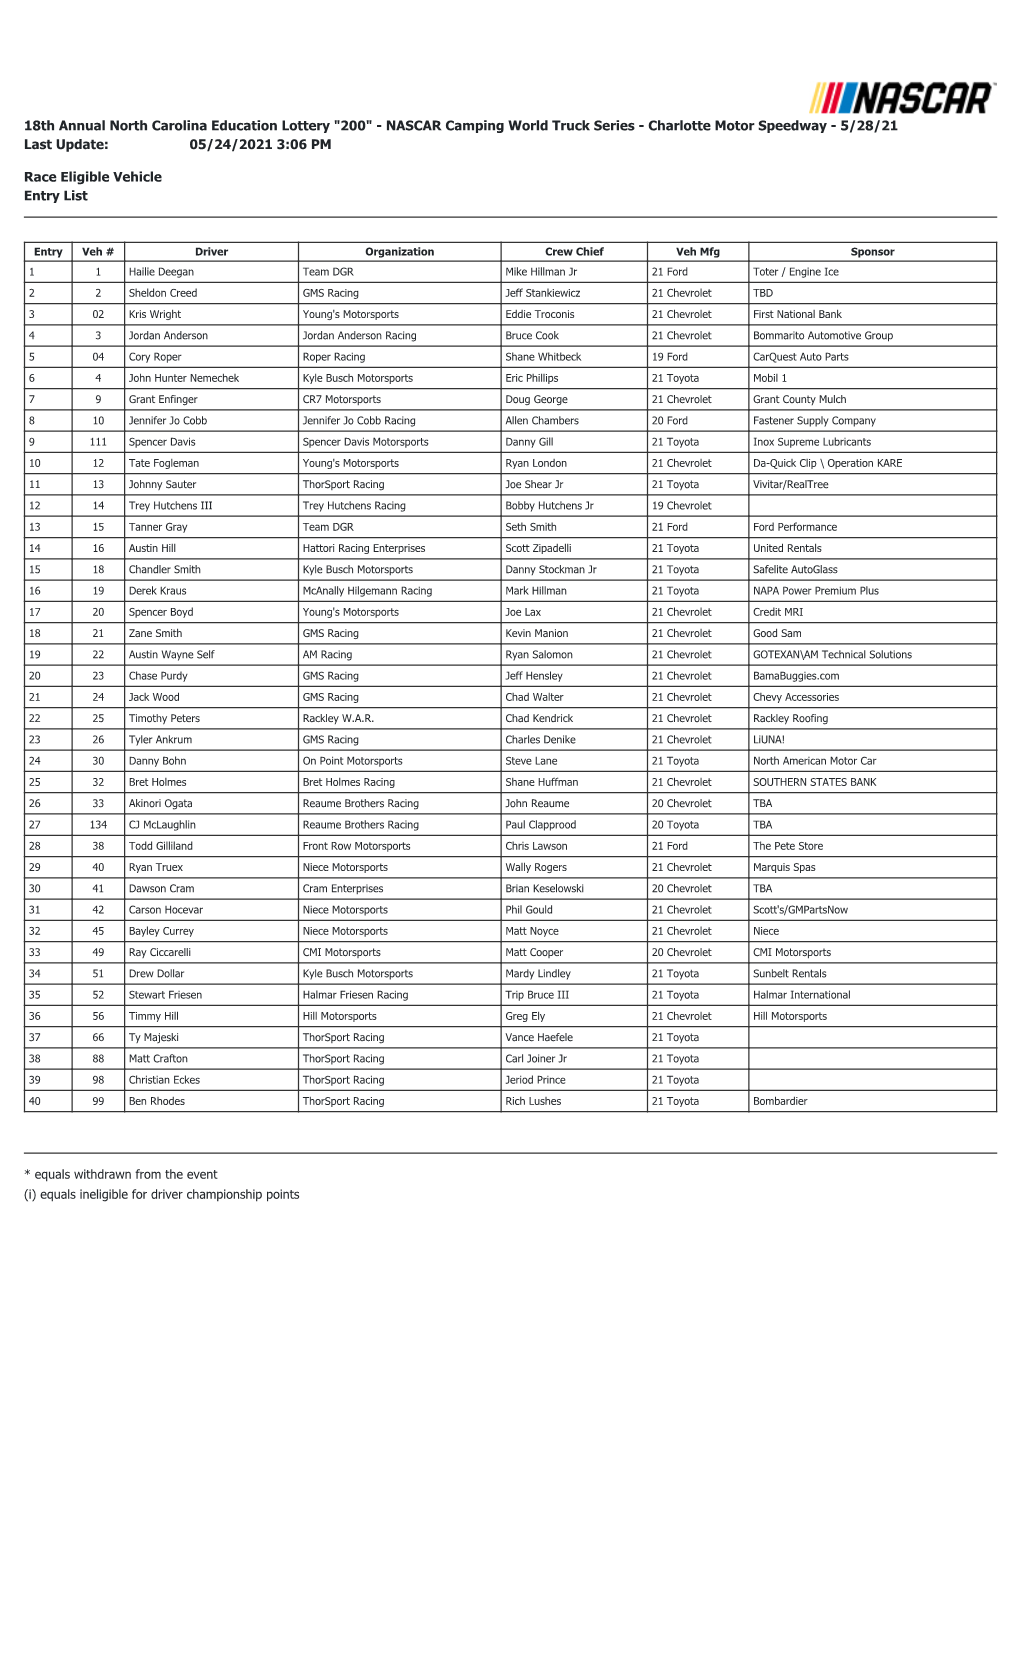 Charlotte Truck Entry List